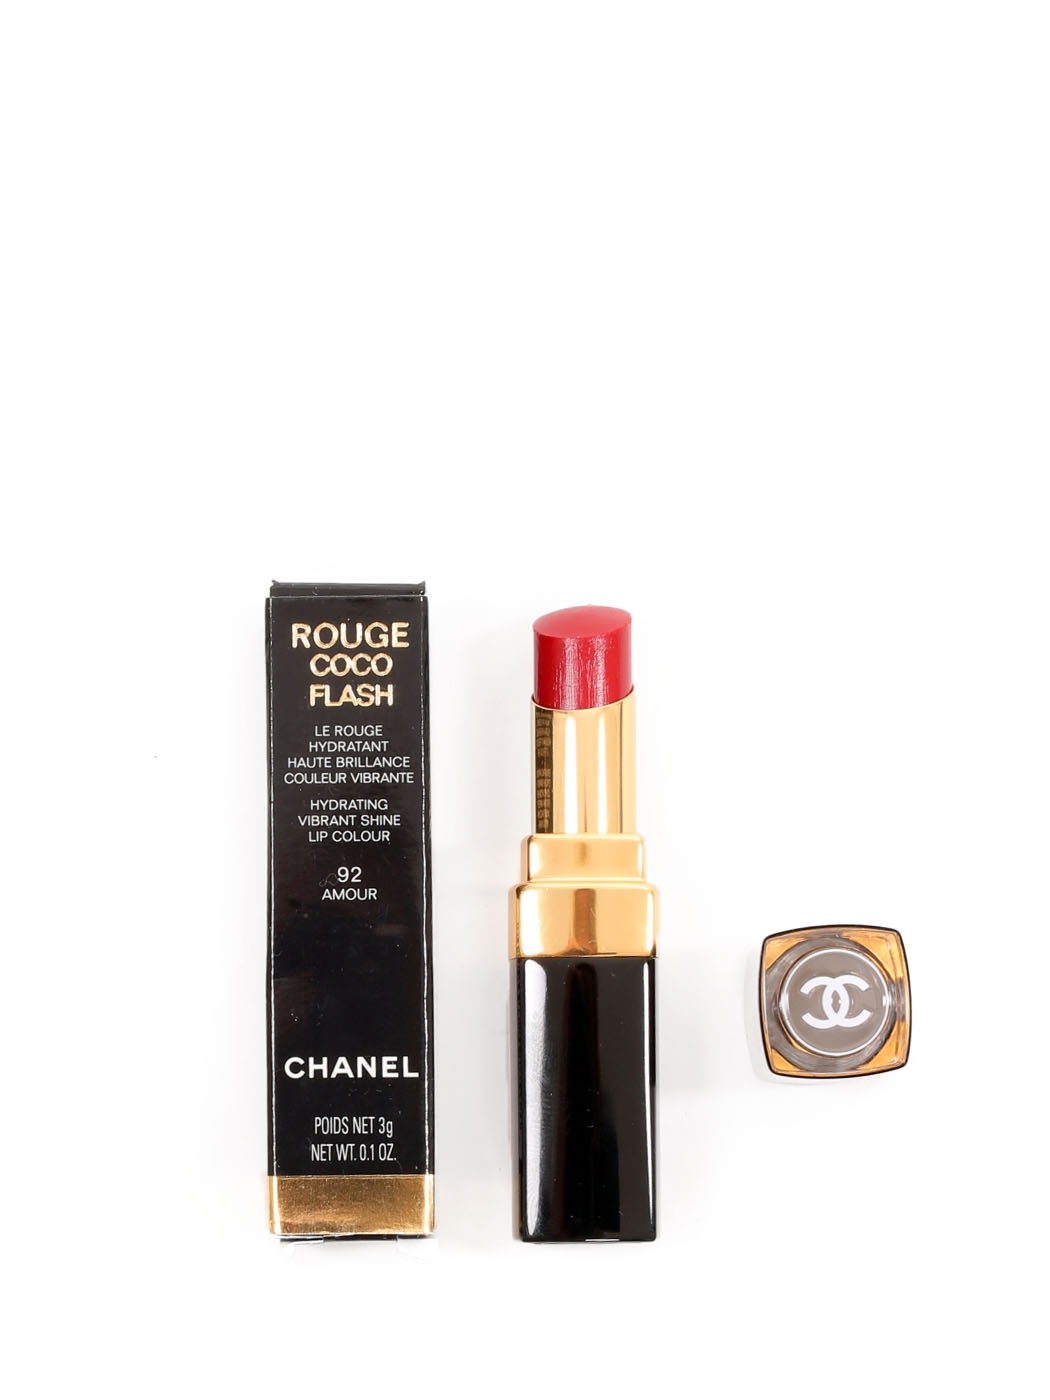 Boutique CHANEL ROUGE COCO FLASH Hydrating vibrant shine Lip